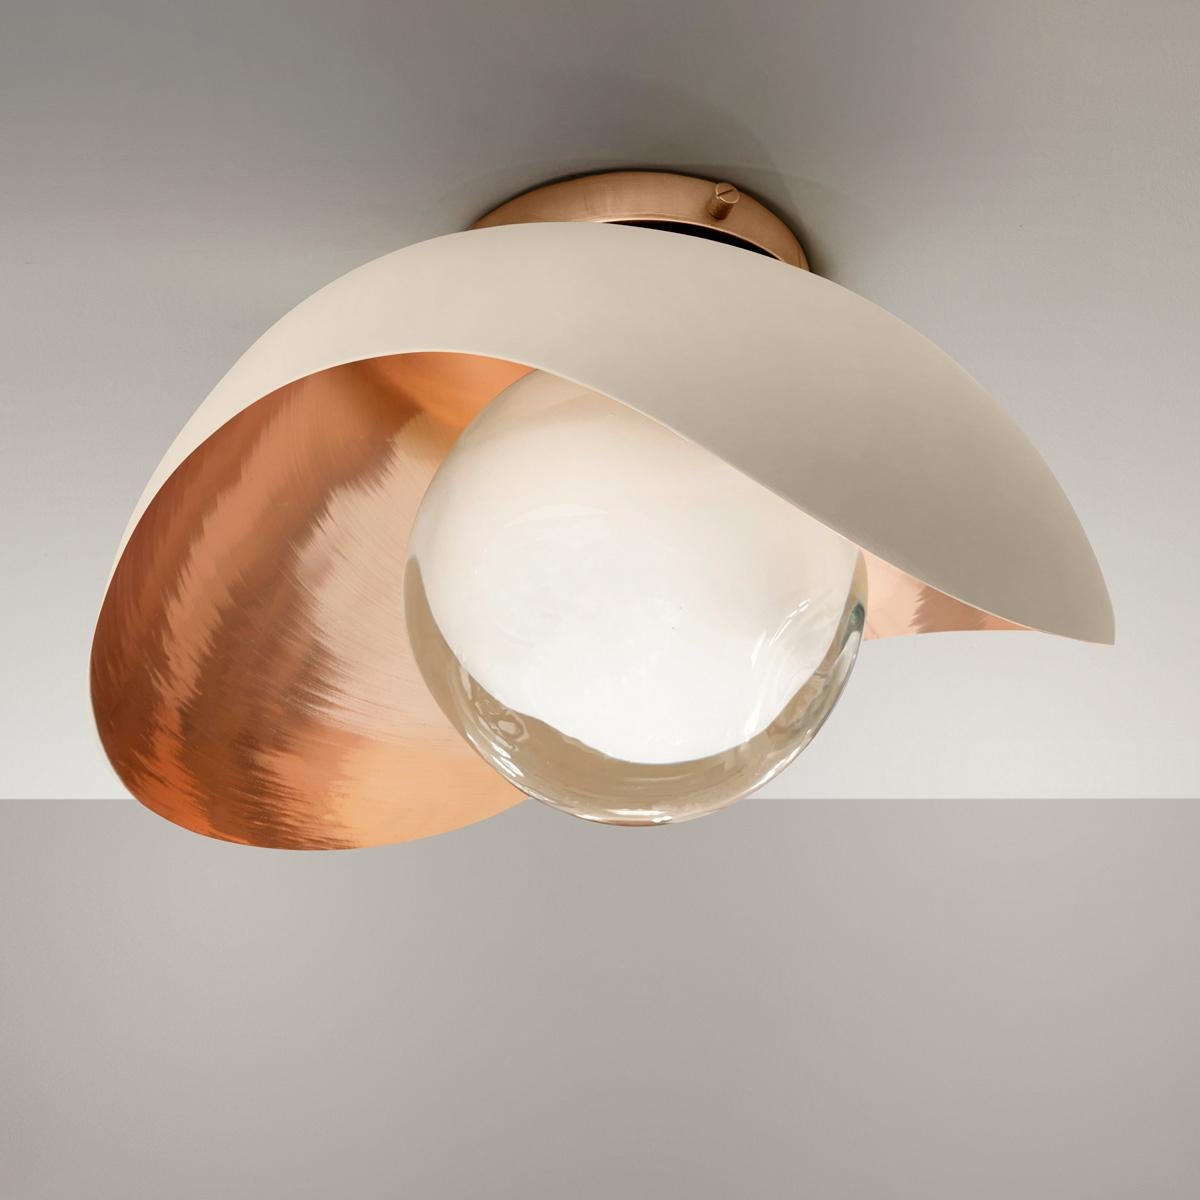 Perla Flushmount Ceiling Light by Gaspare Asaro-Satin Brass/Bronze Finish. For Sale 4